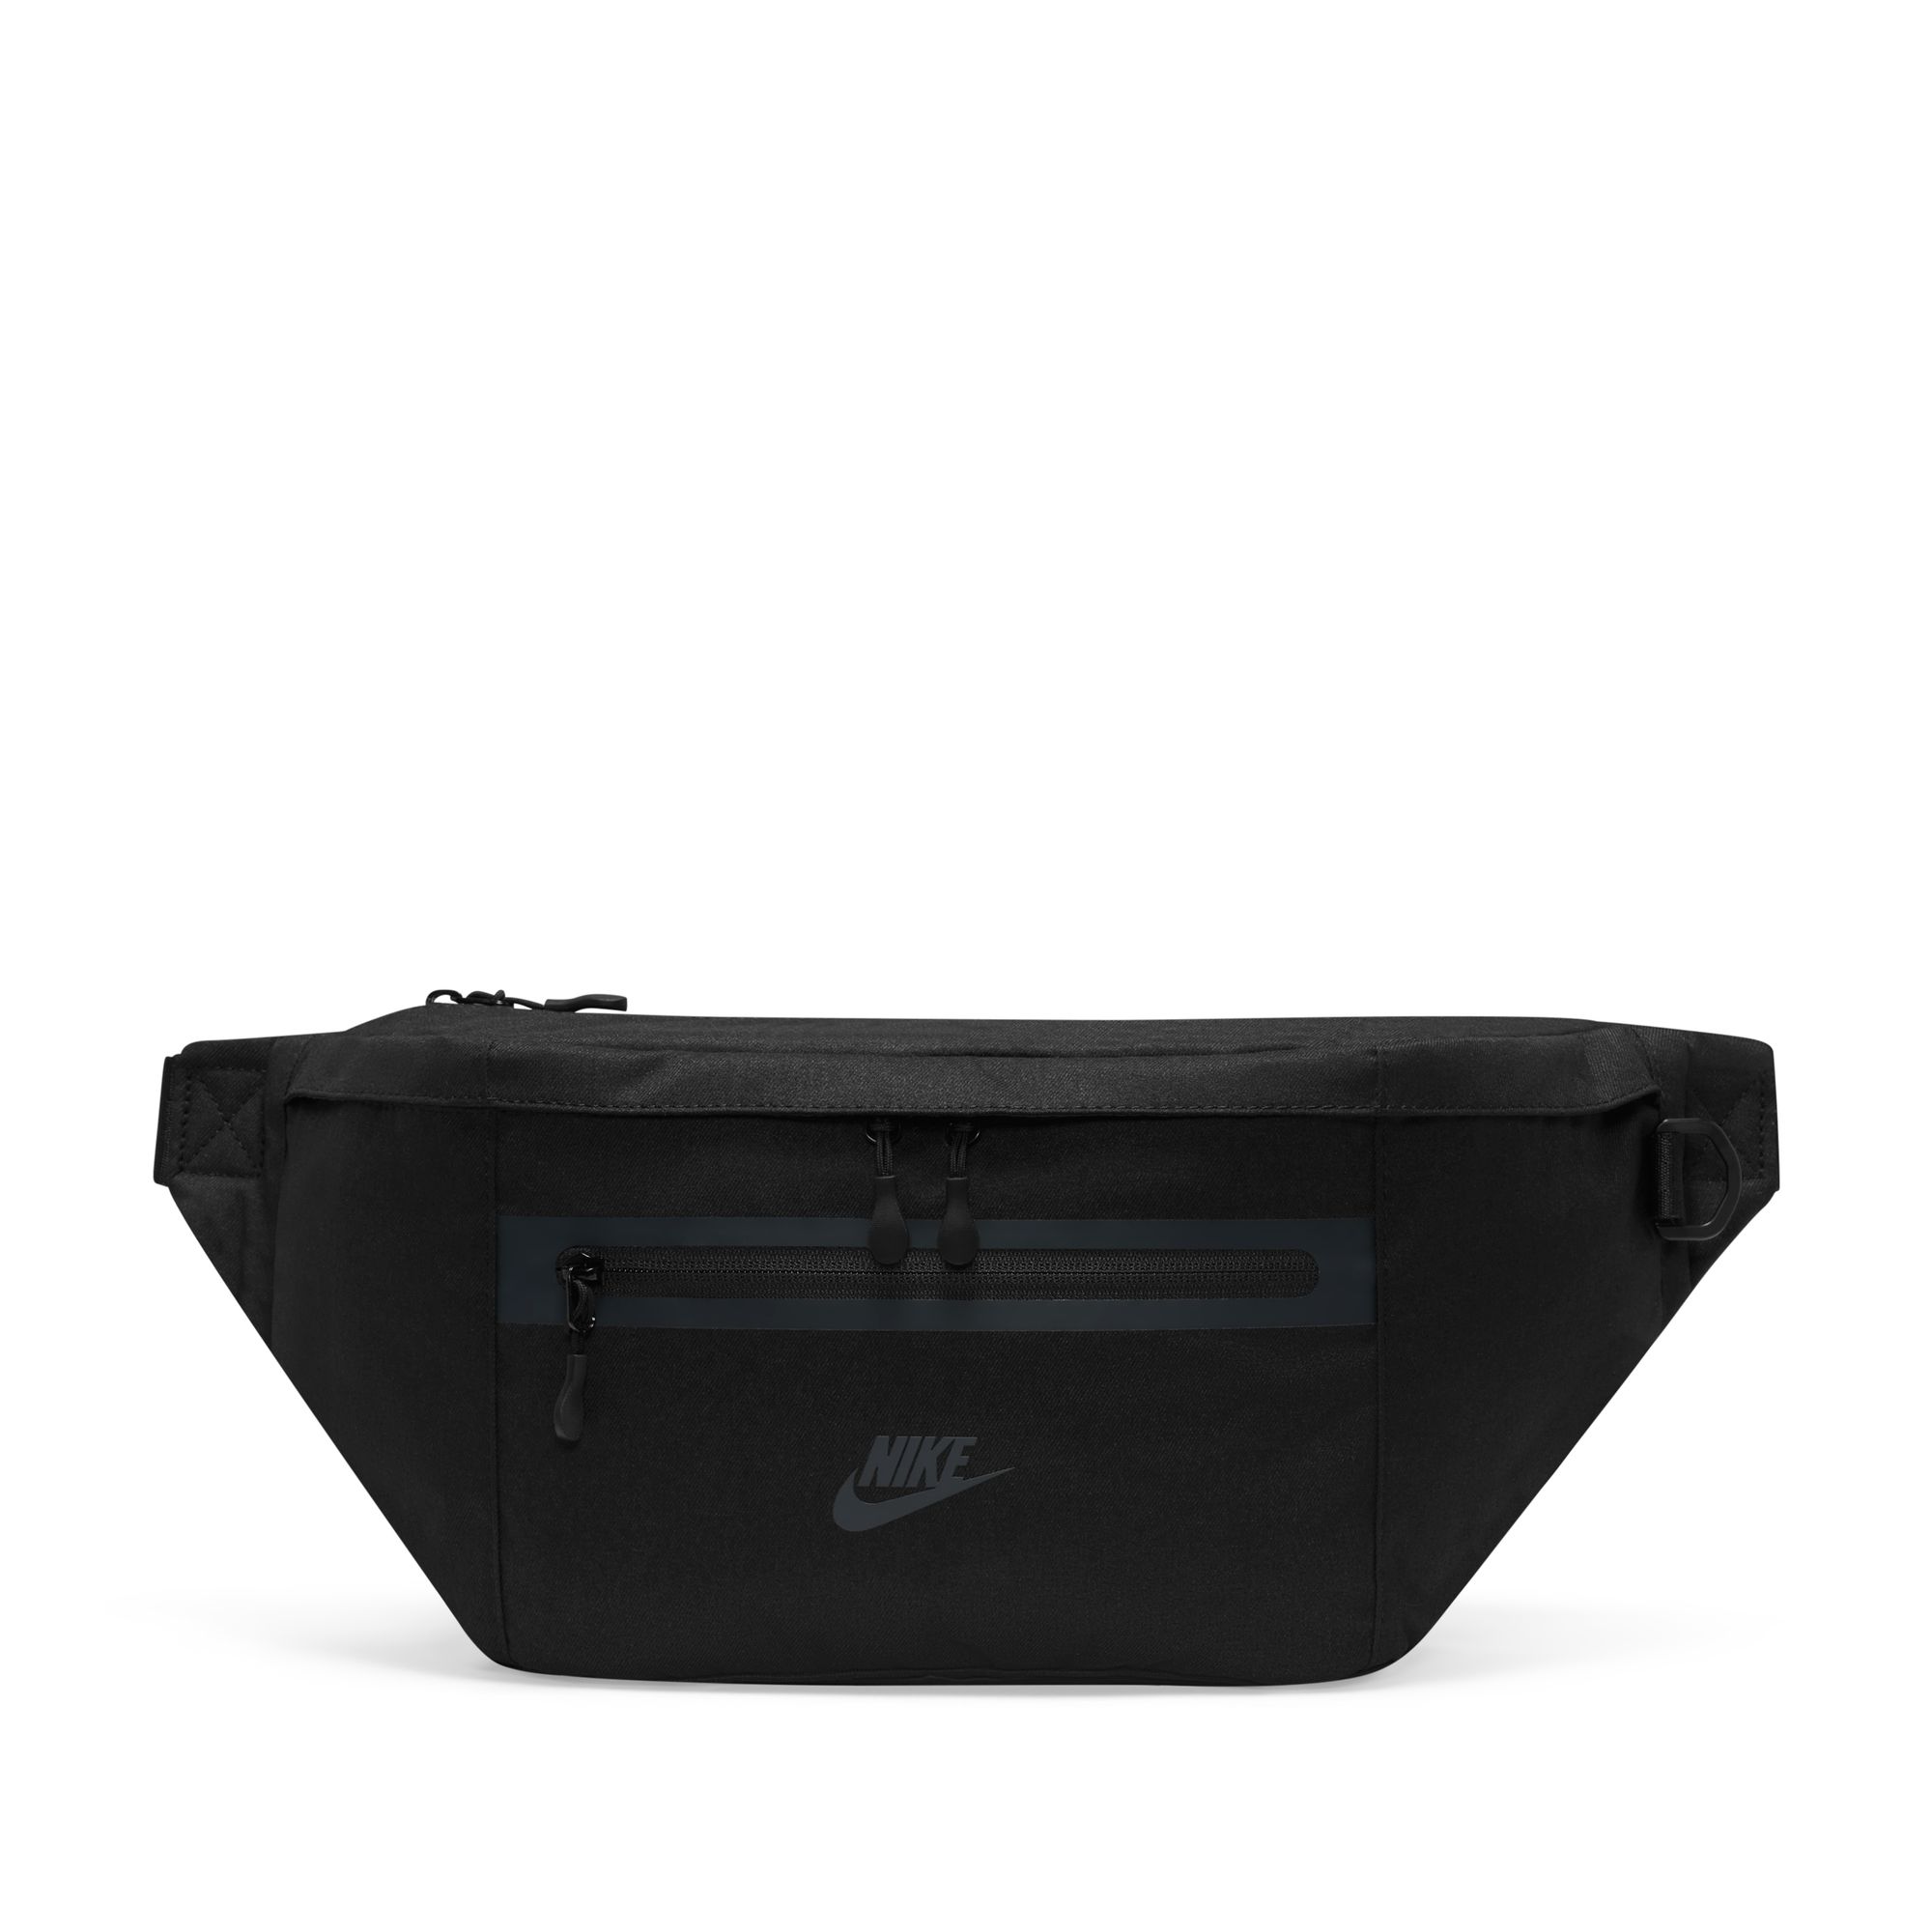 Nike Elemental Premium Bag Black 01